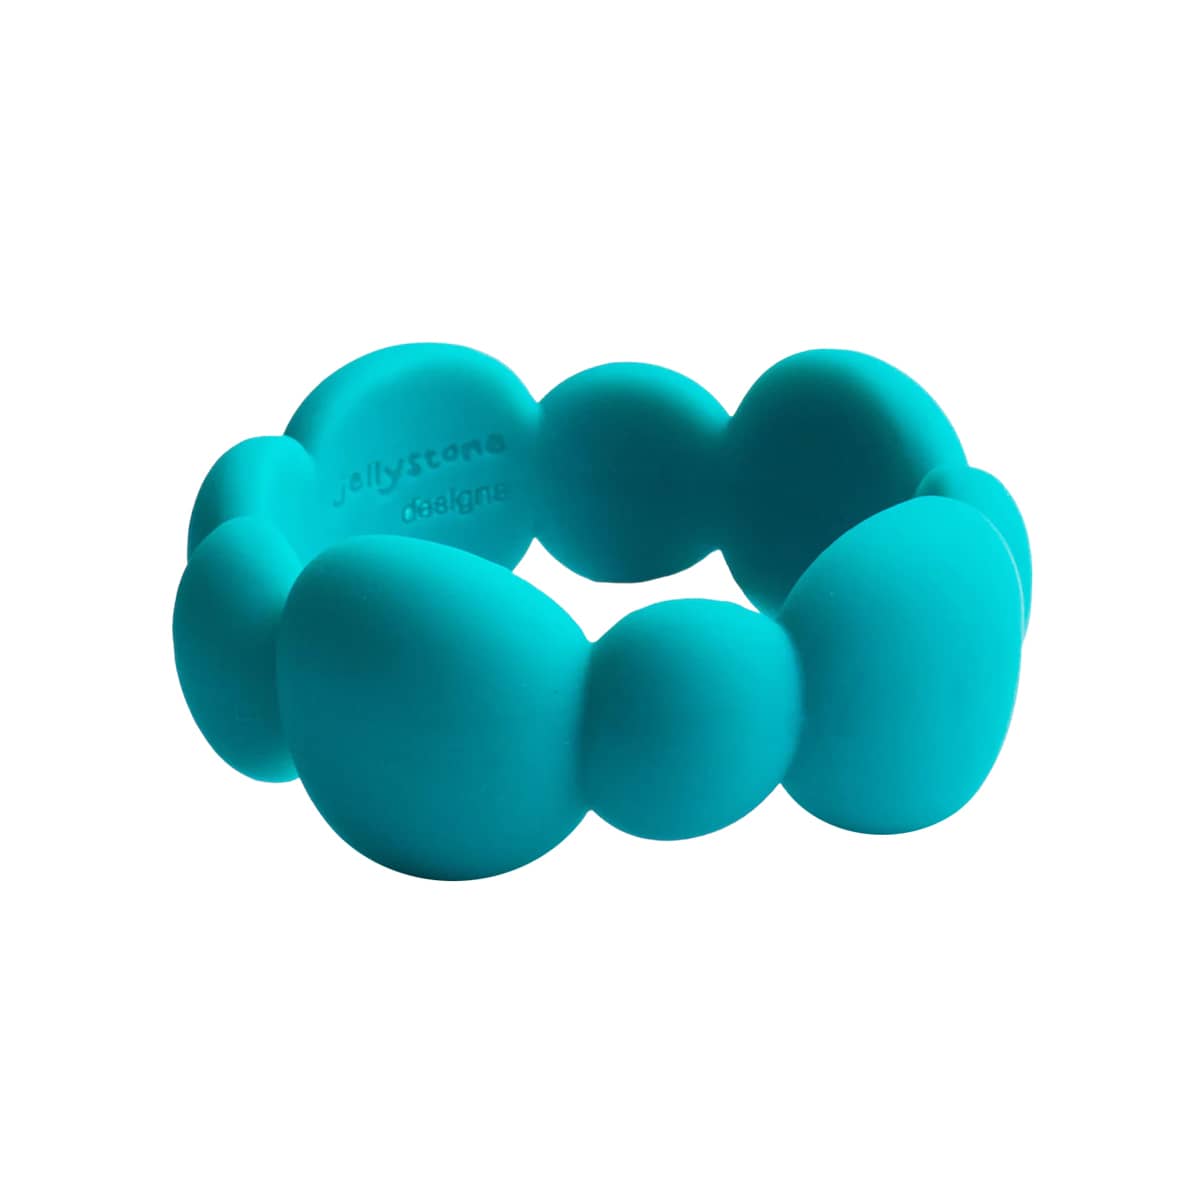 Jellystone Designs Pebble Bangle - Turquoise